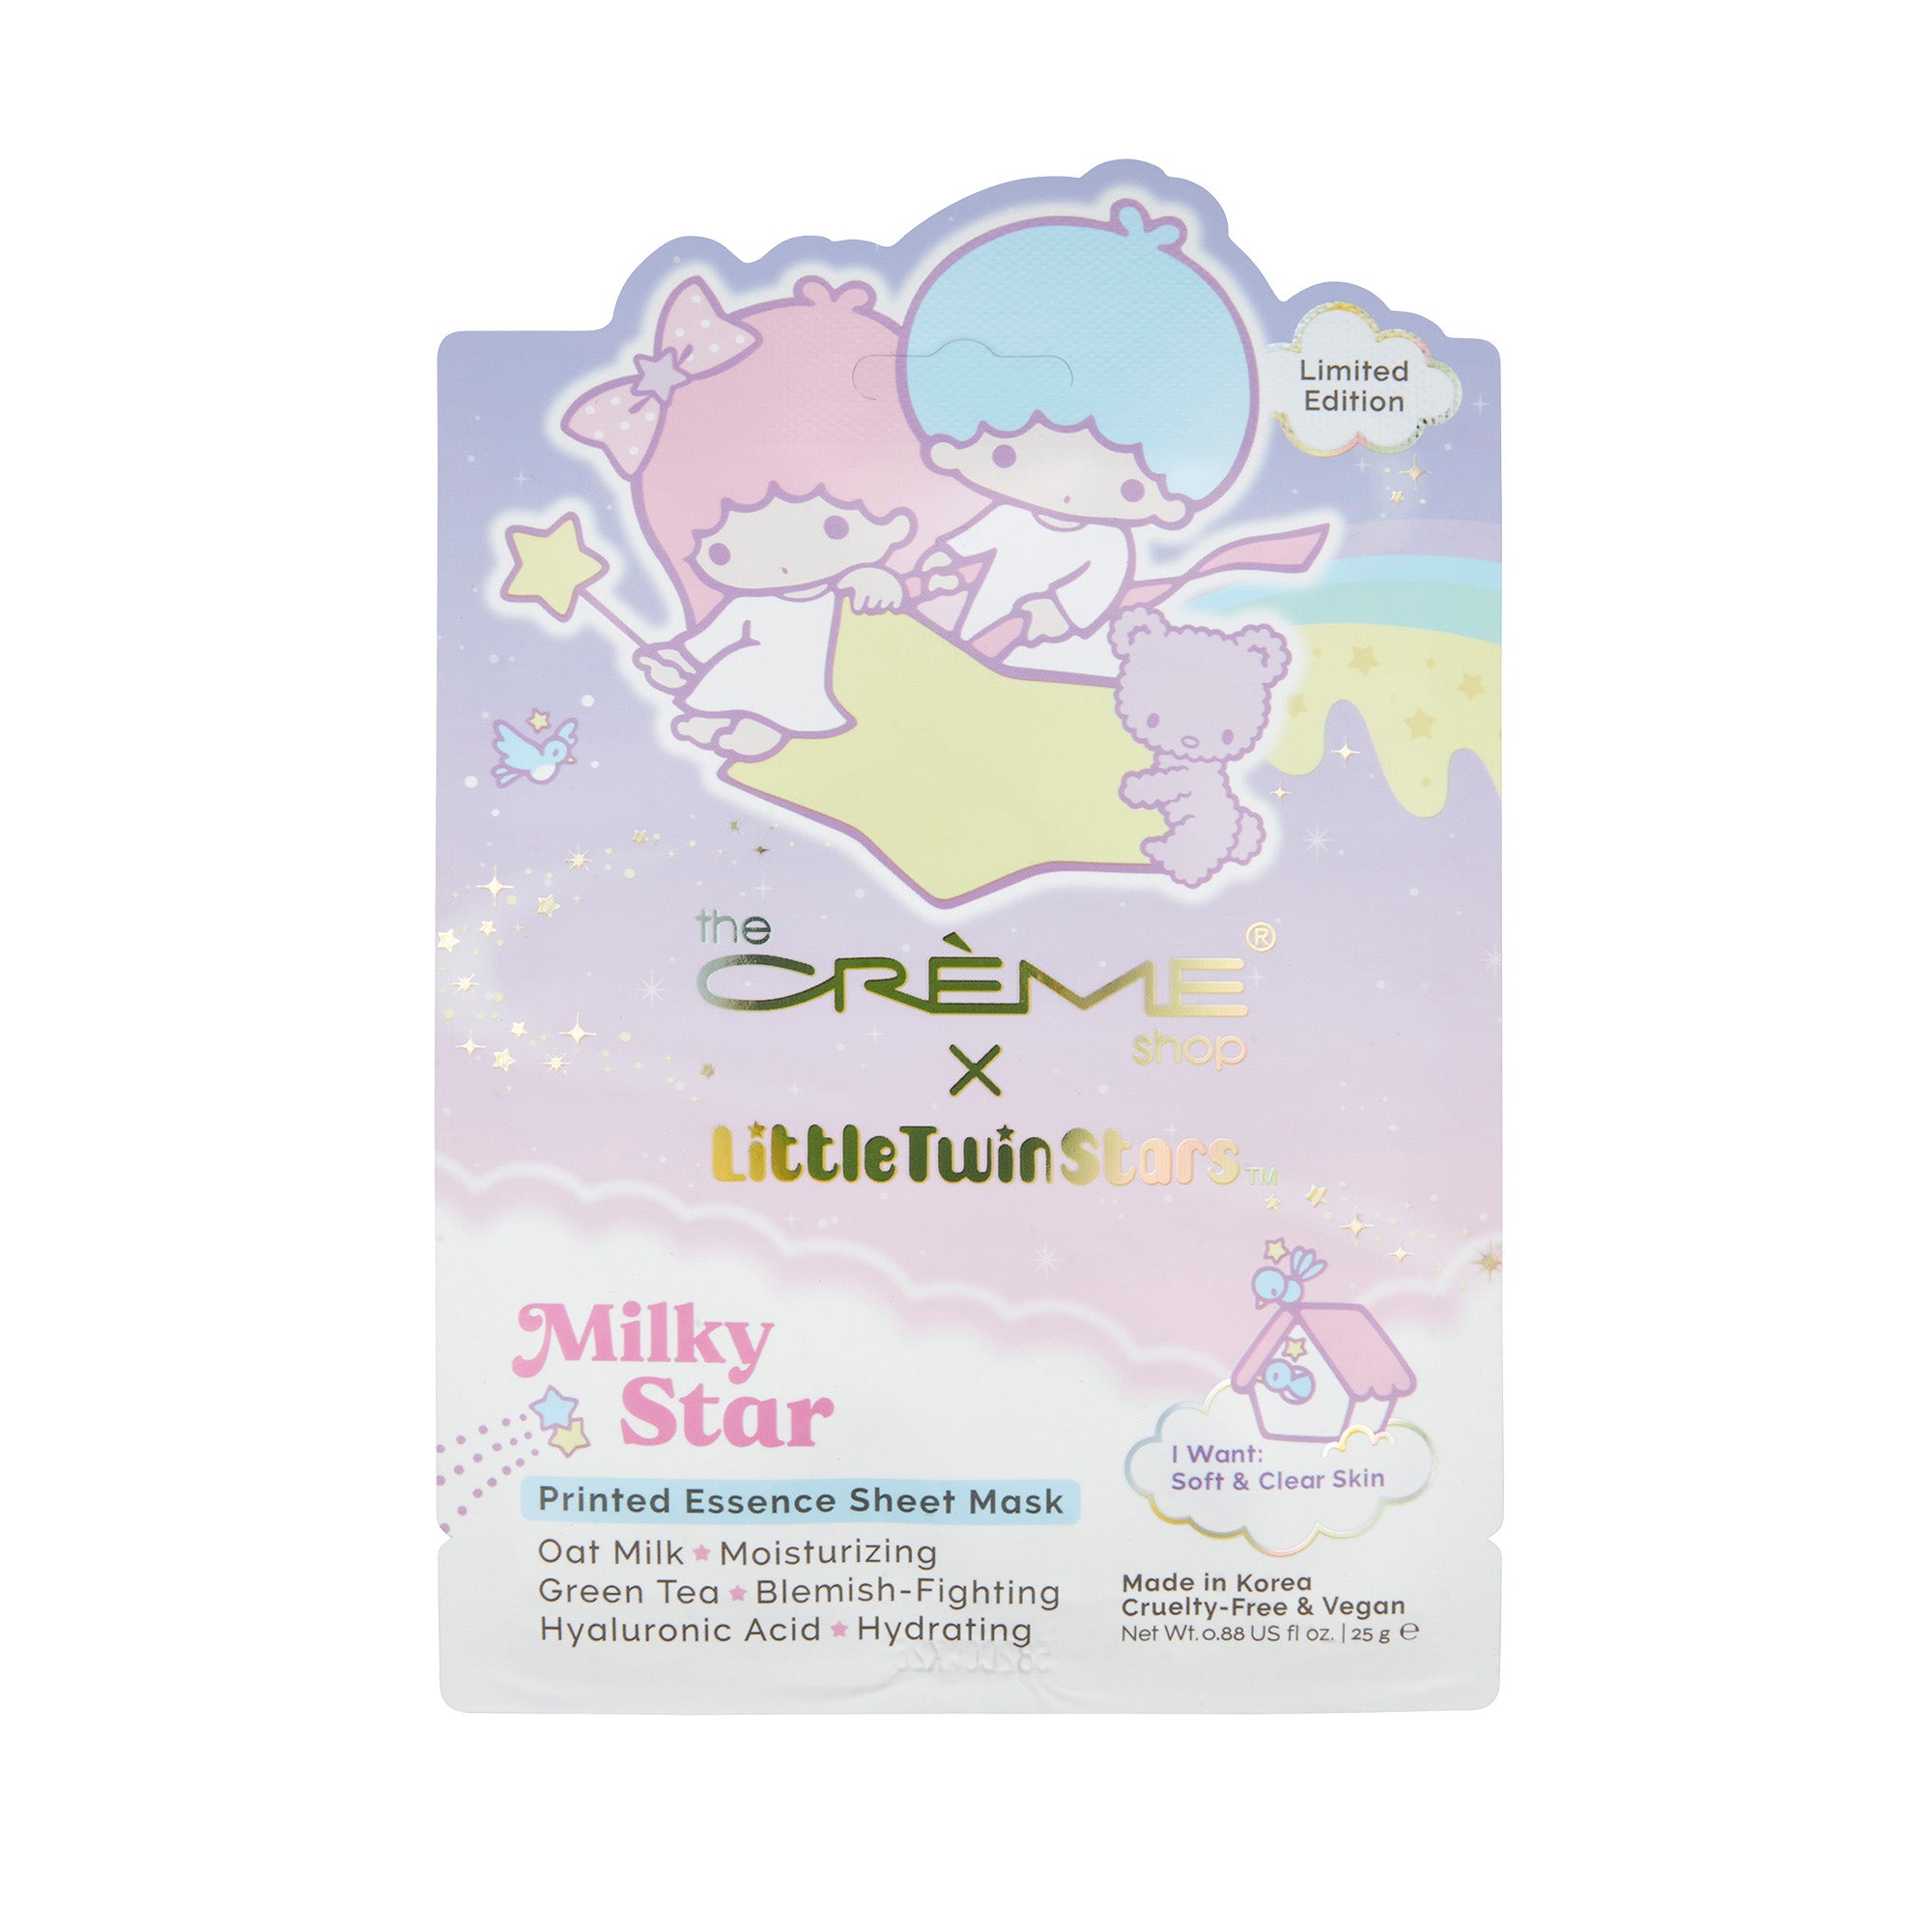 LittleTwinStars x The Crème Shop Milky Star Printed Essence Sheet Mask Beauty The Crème Shop   